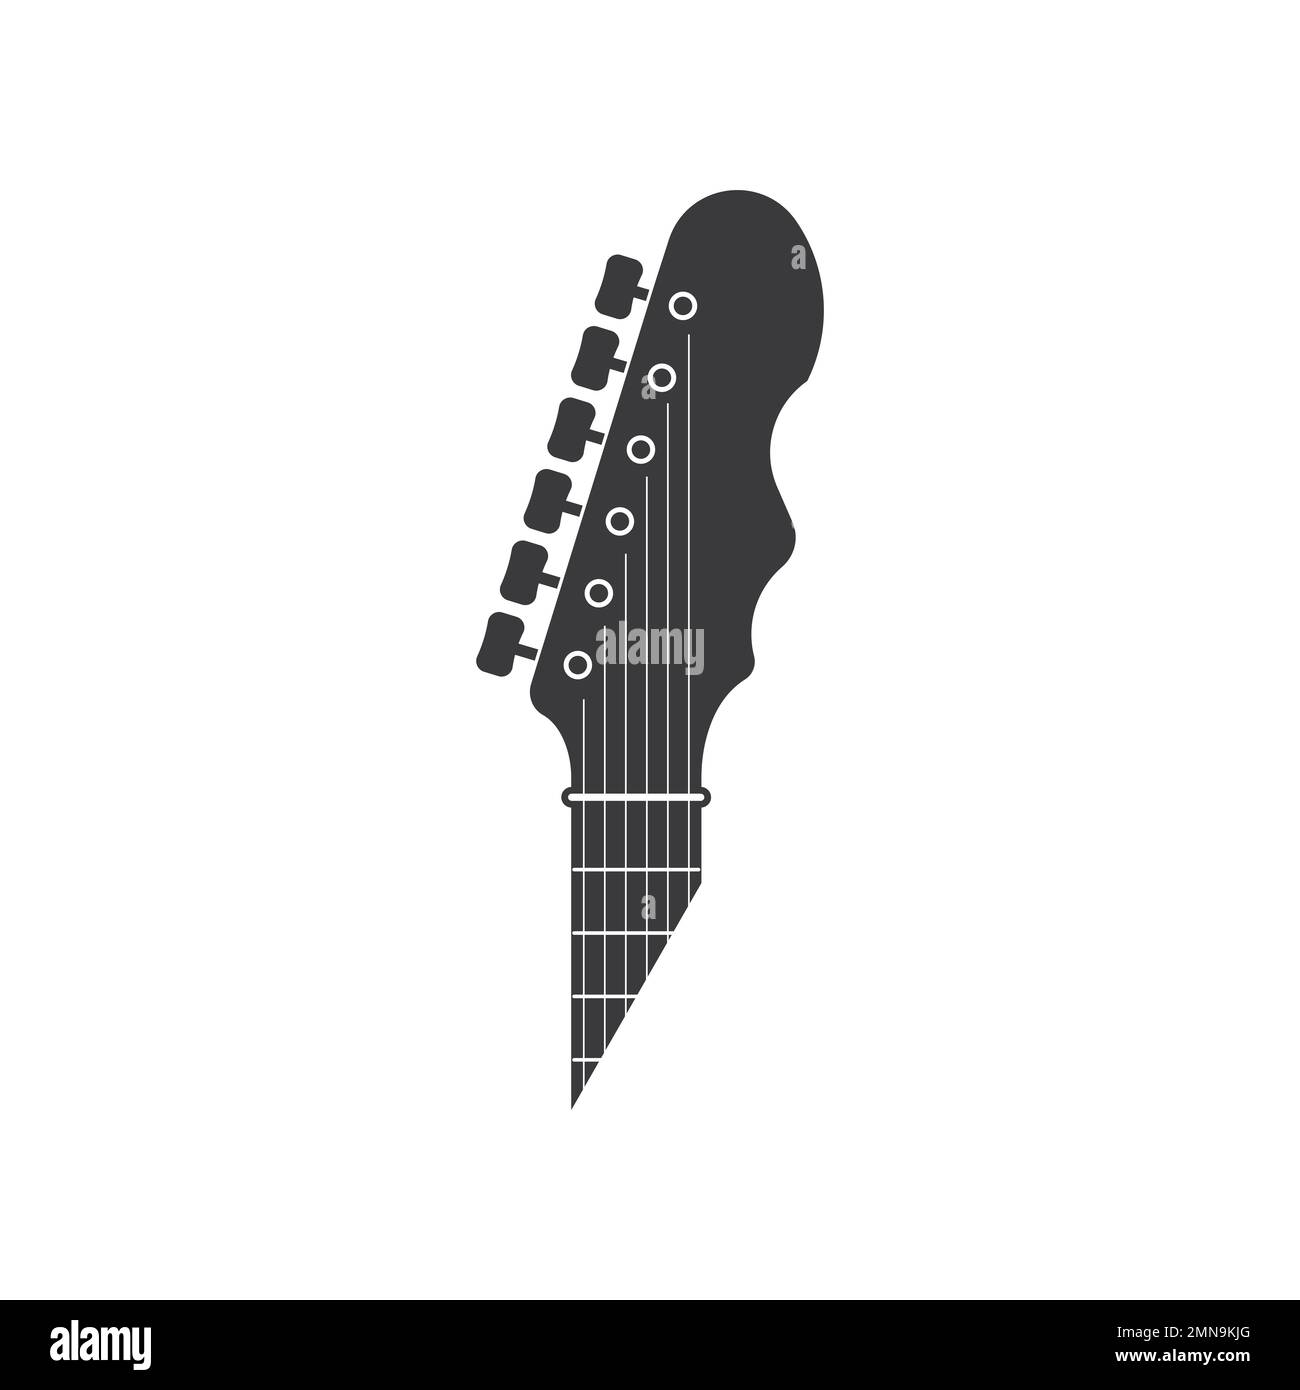 guitar logo vector illustration design template Stock Photo - Alamy